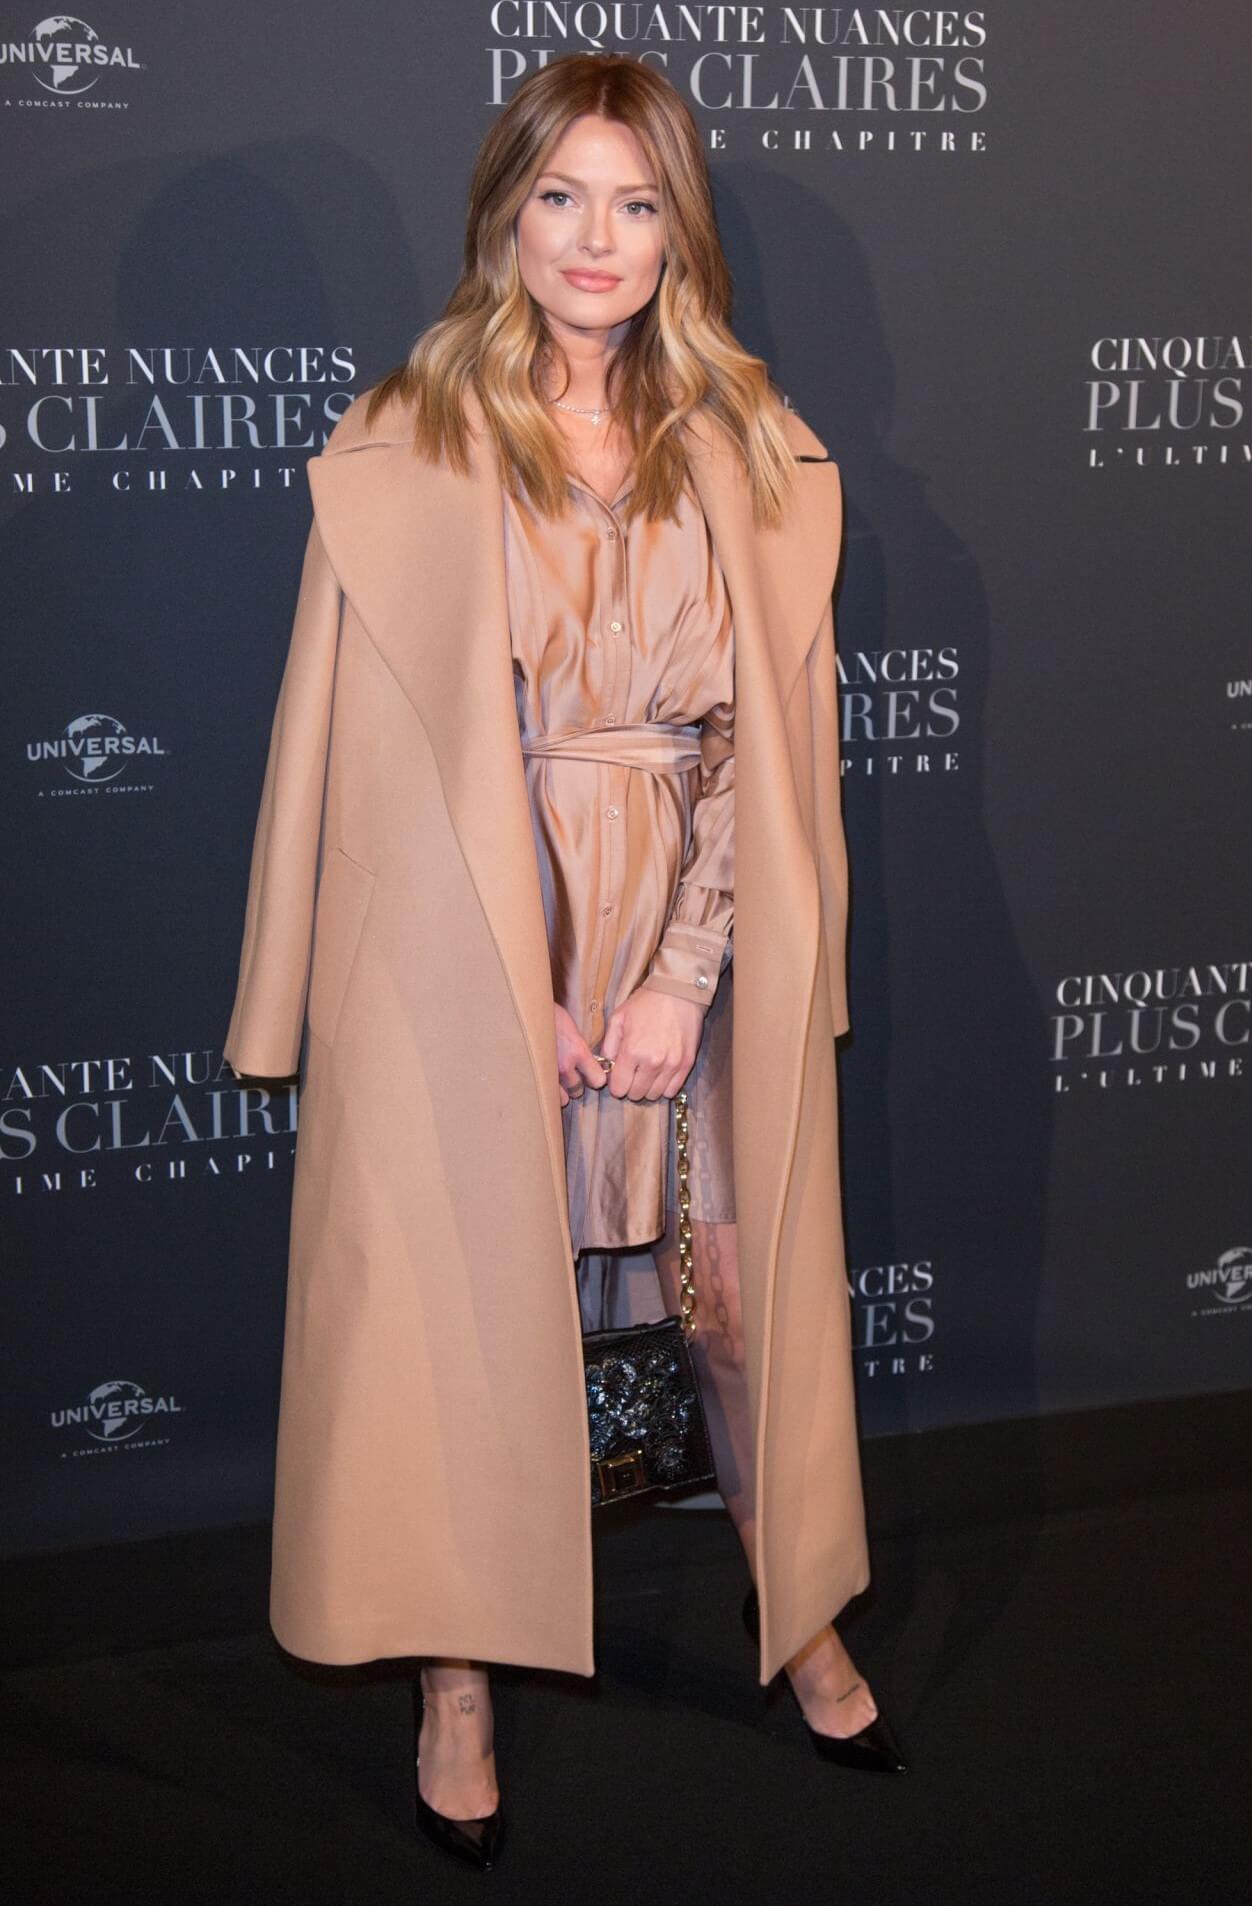 Caroline Receveur  In Beige Overlong Coat Under Short Dress At“Fifty Shades Freed” Premiere in Paris